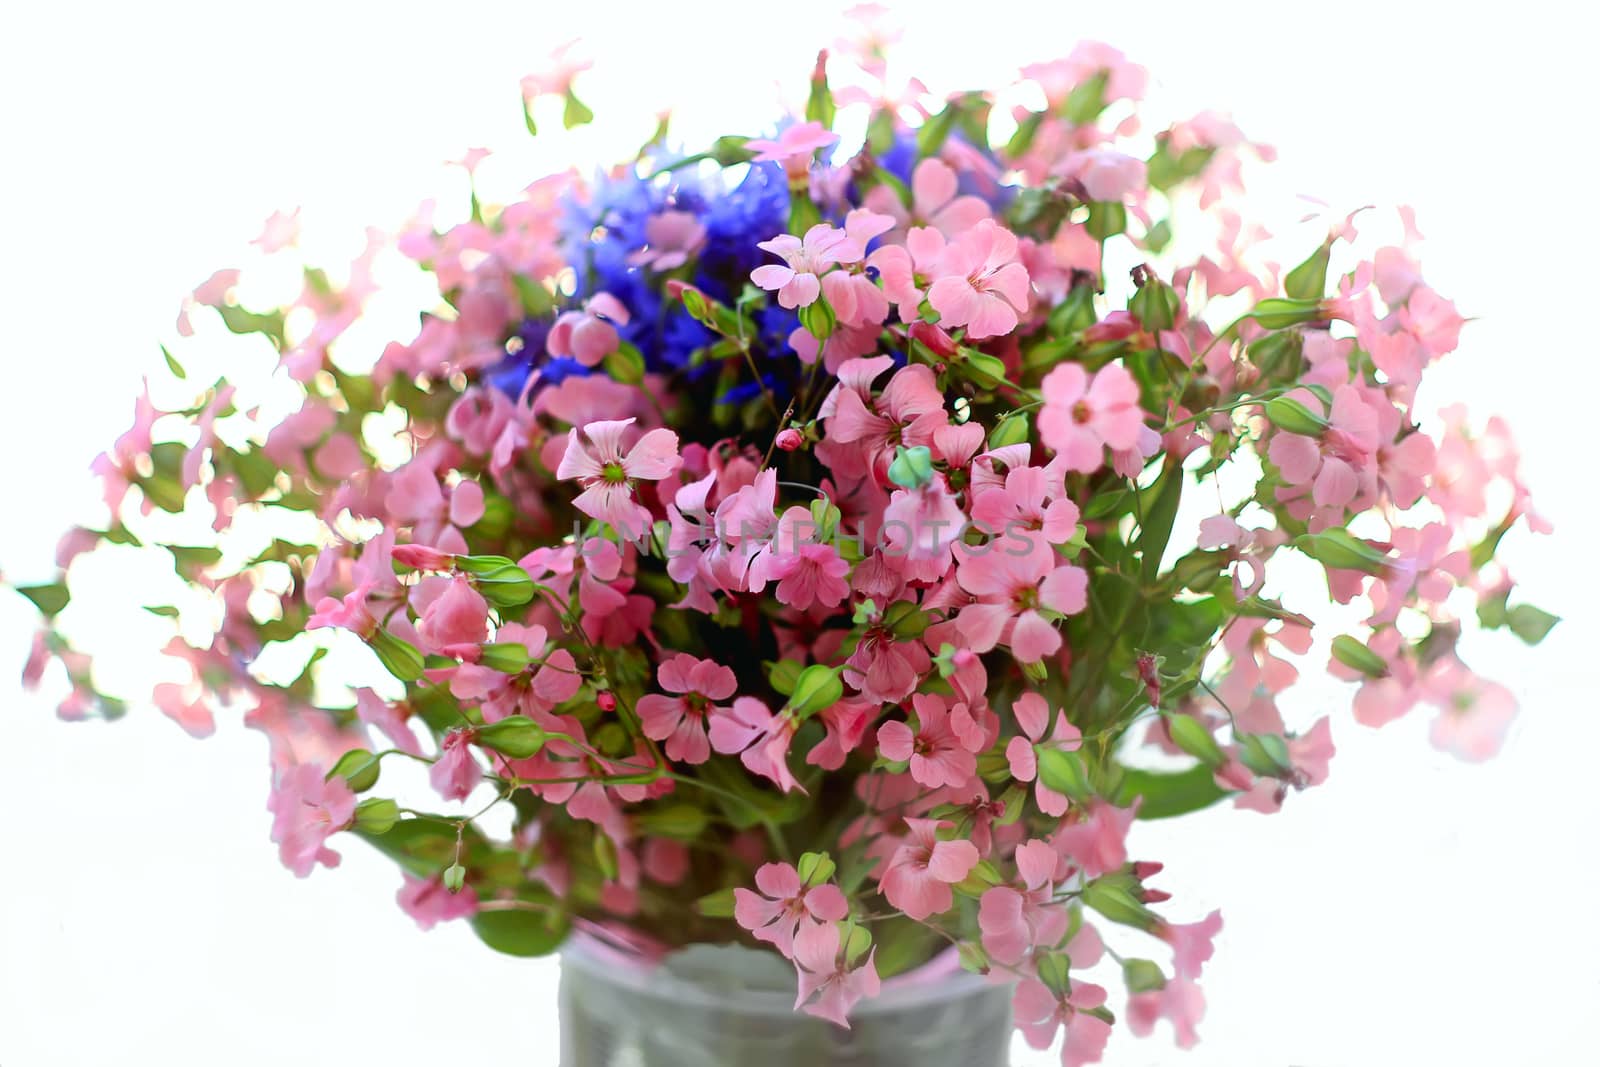 bouquet of wild flowers pink and blue on a white background by KoliadzynskaIryna